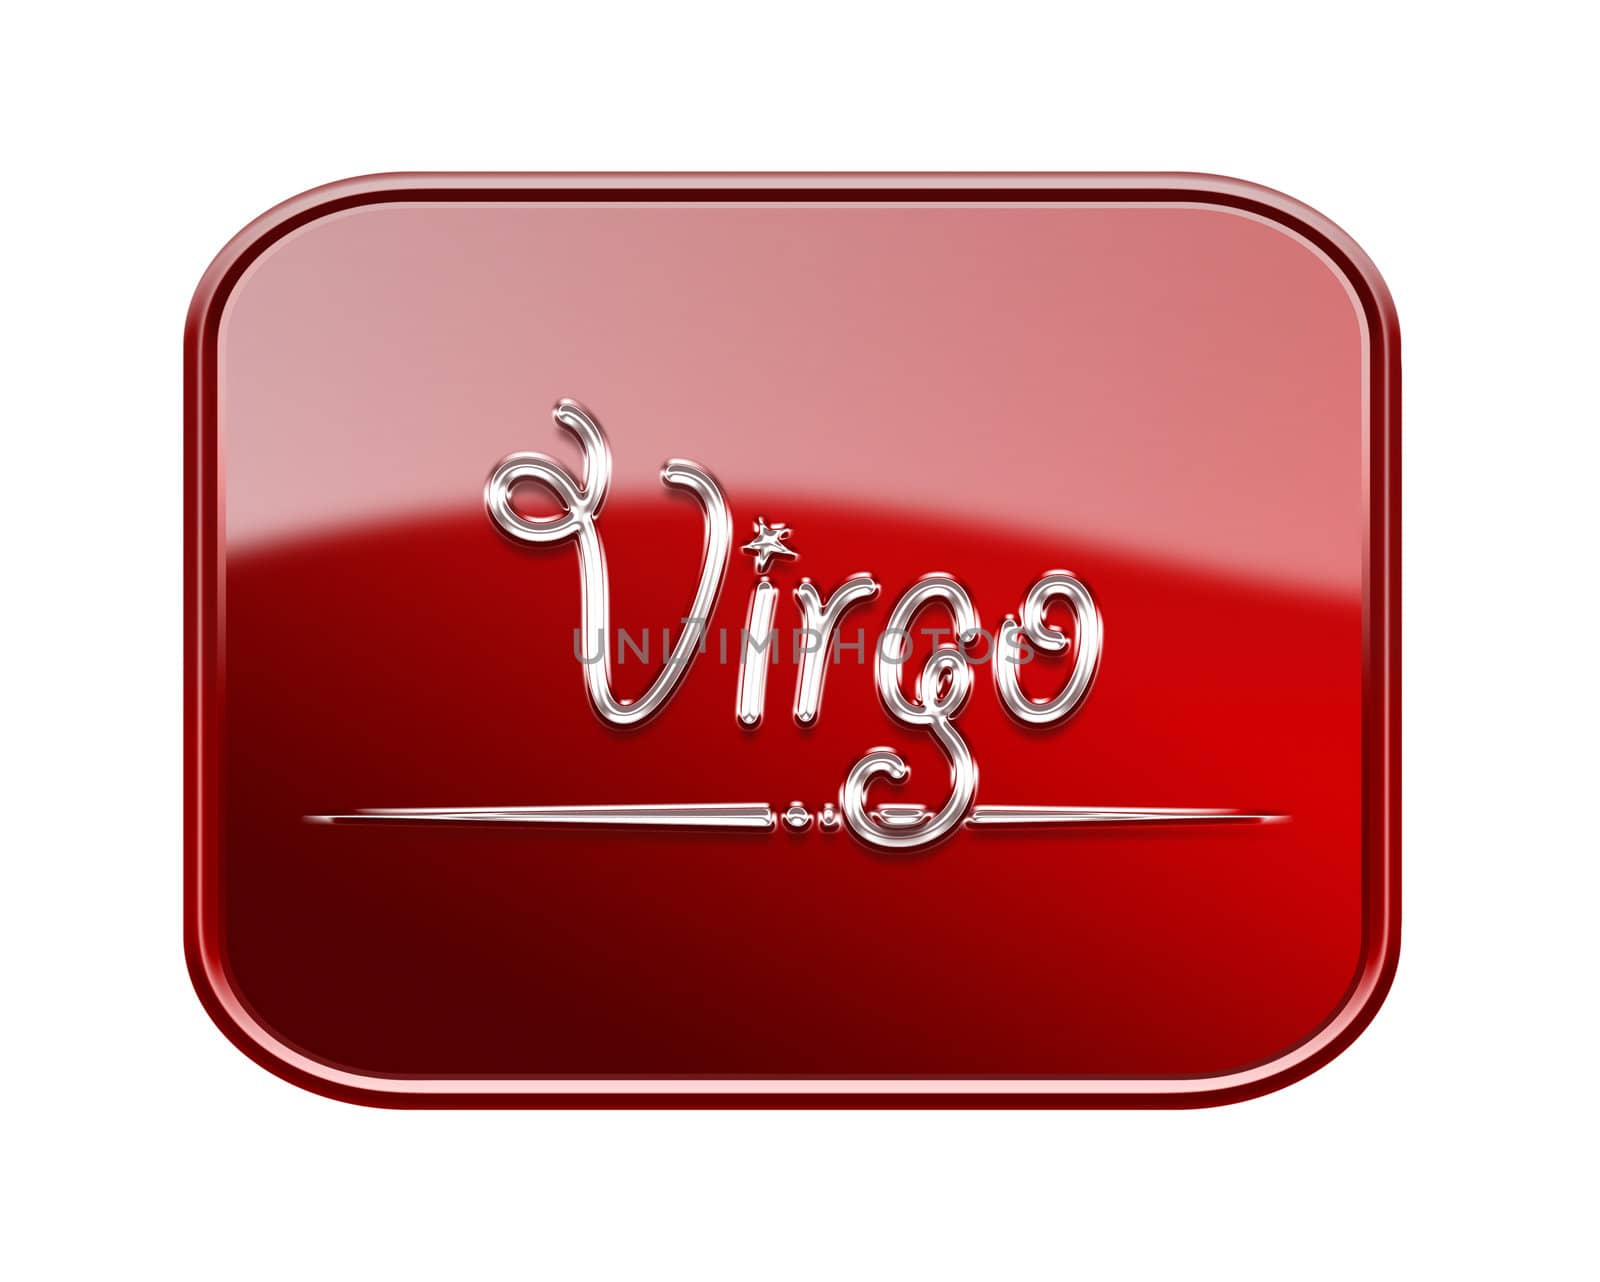 Virgo zodiac icon red glossy, isolated on white background